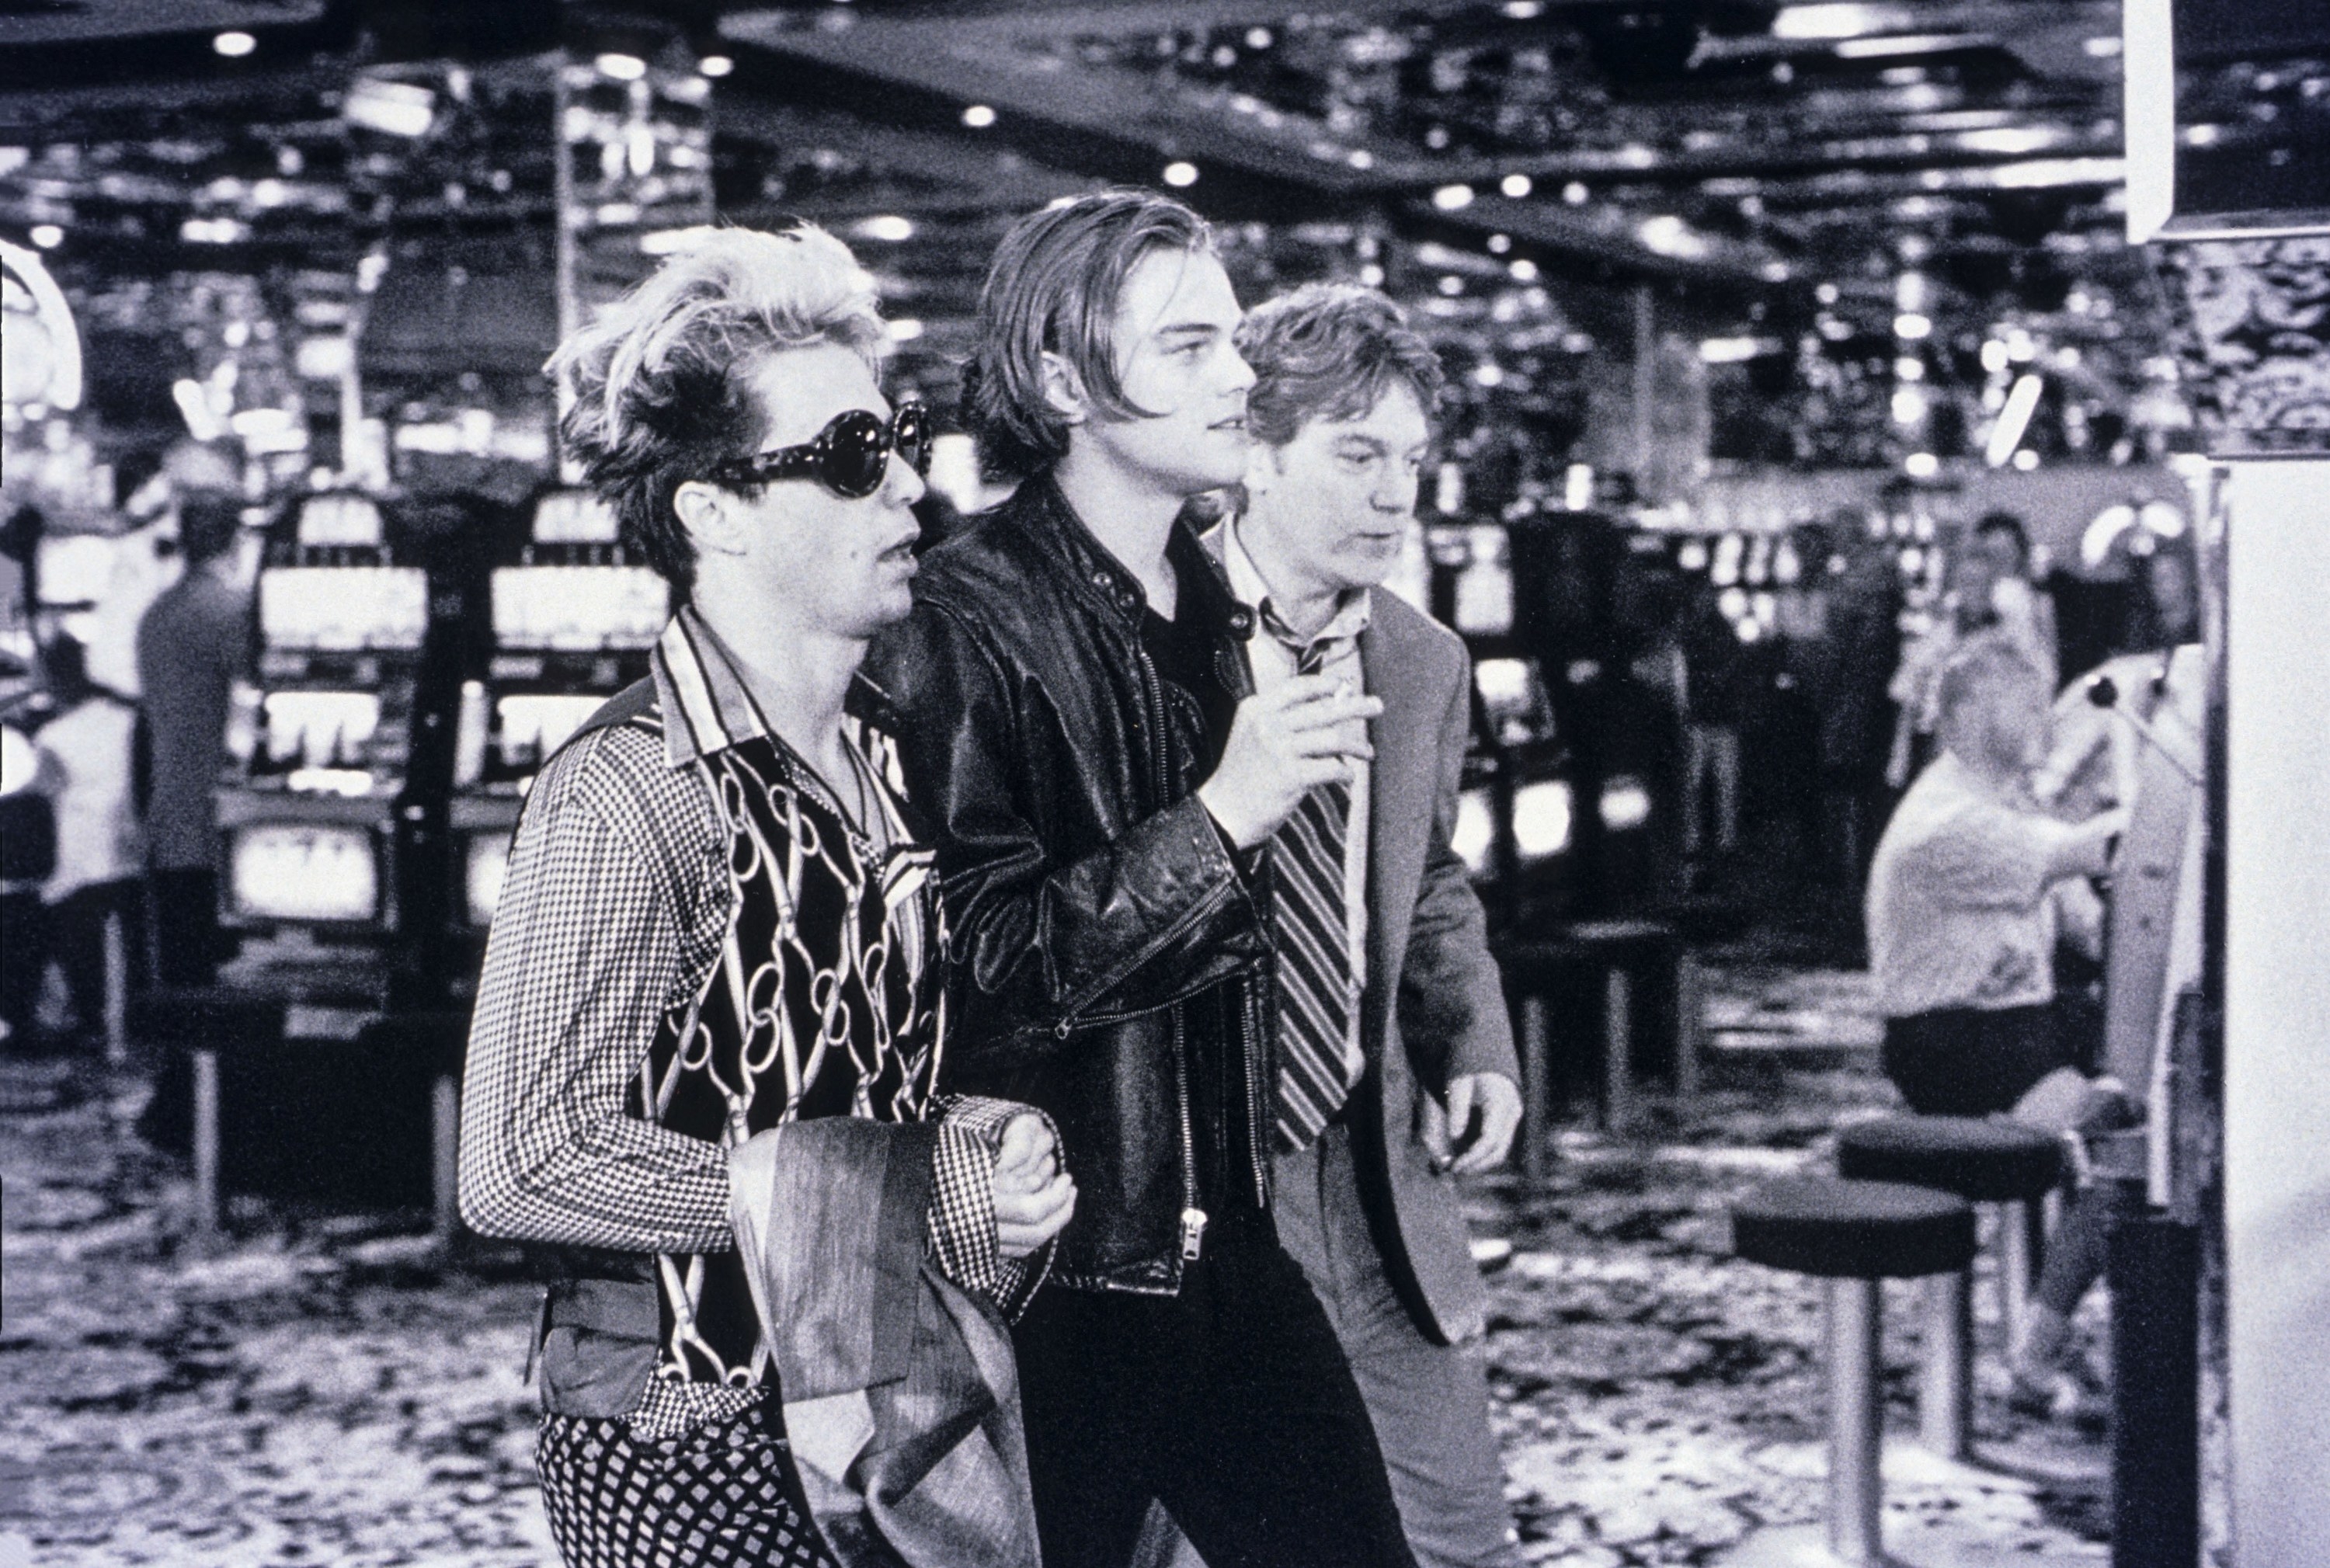 Sam Rockwell, Leonardo DiCaprio, and Kenneth Branagh walk through a casino together